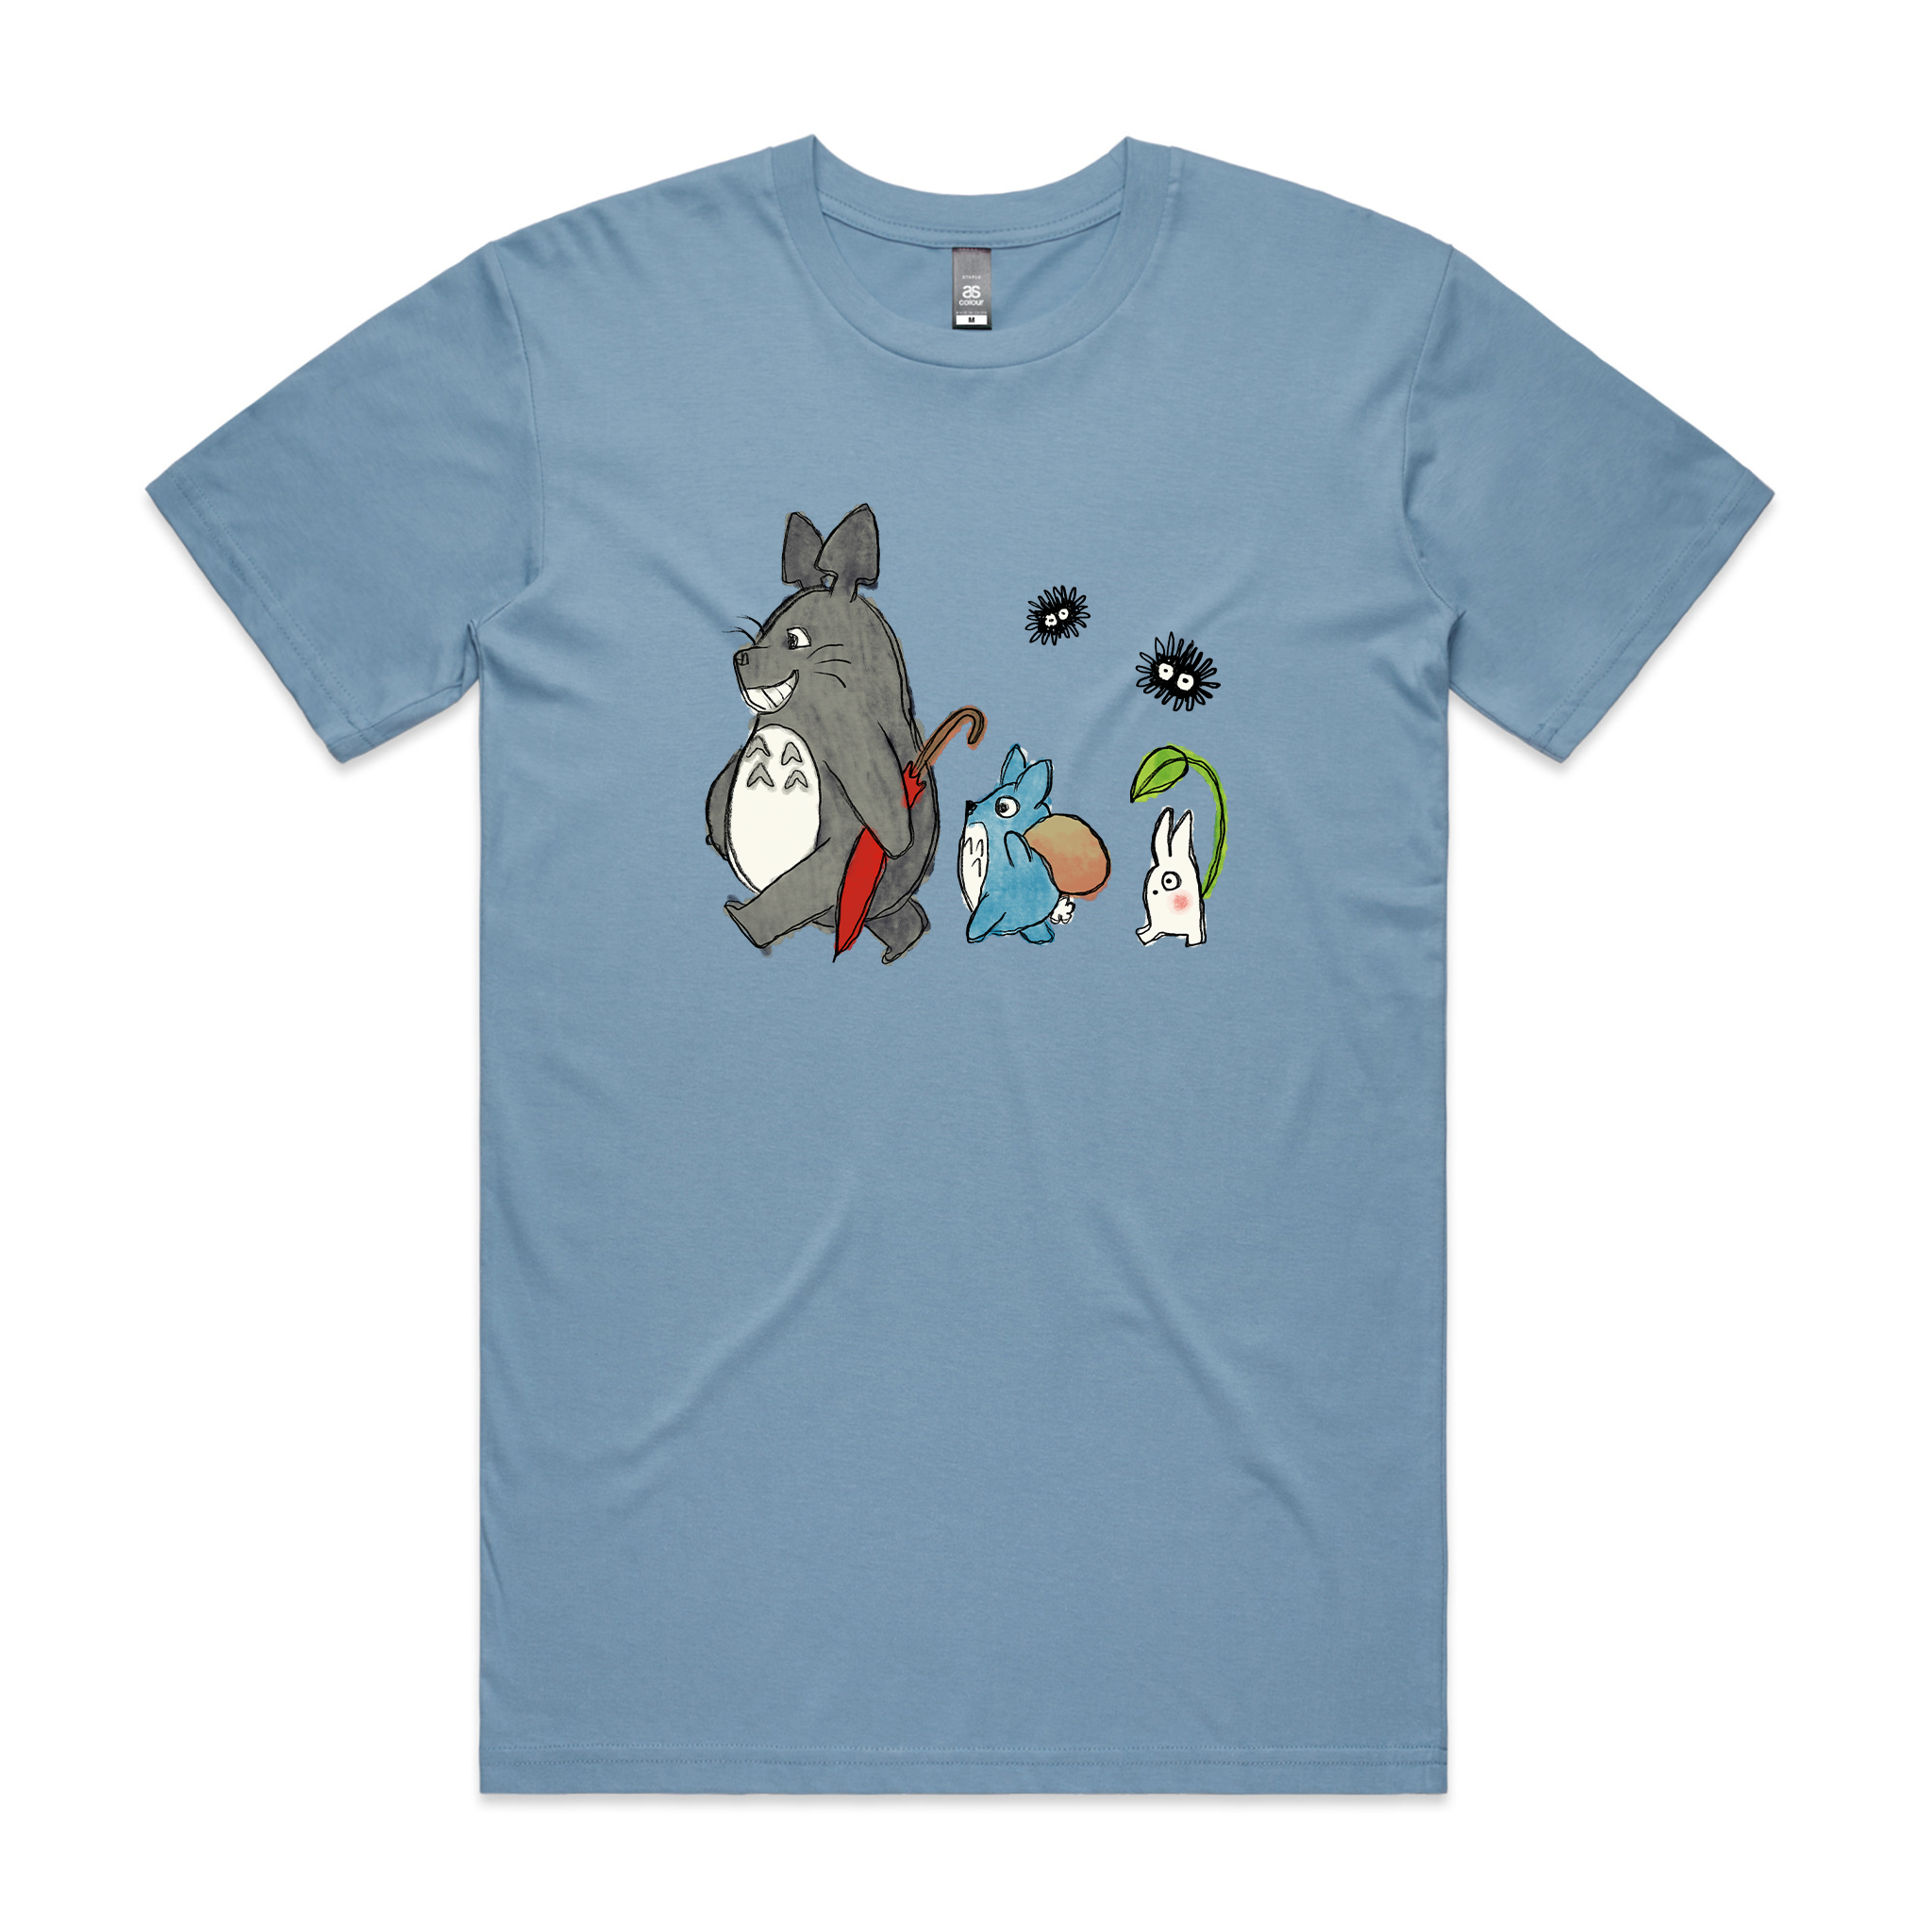 Totoro & Friends Tee